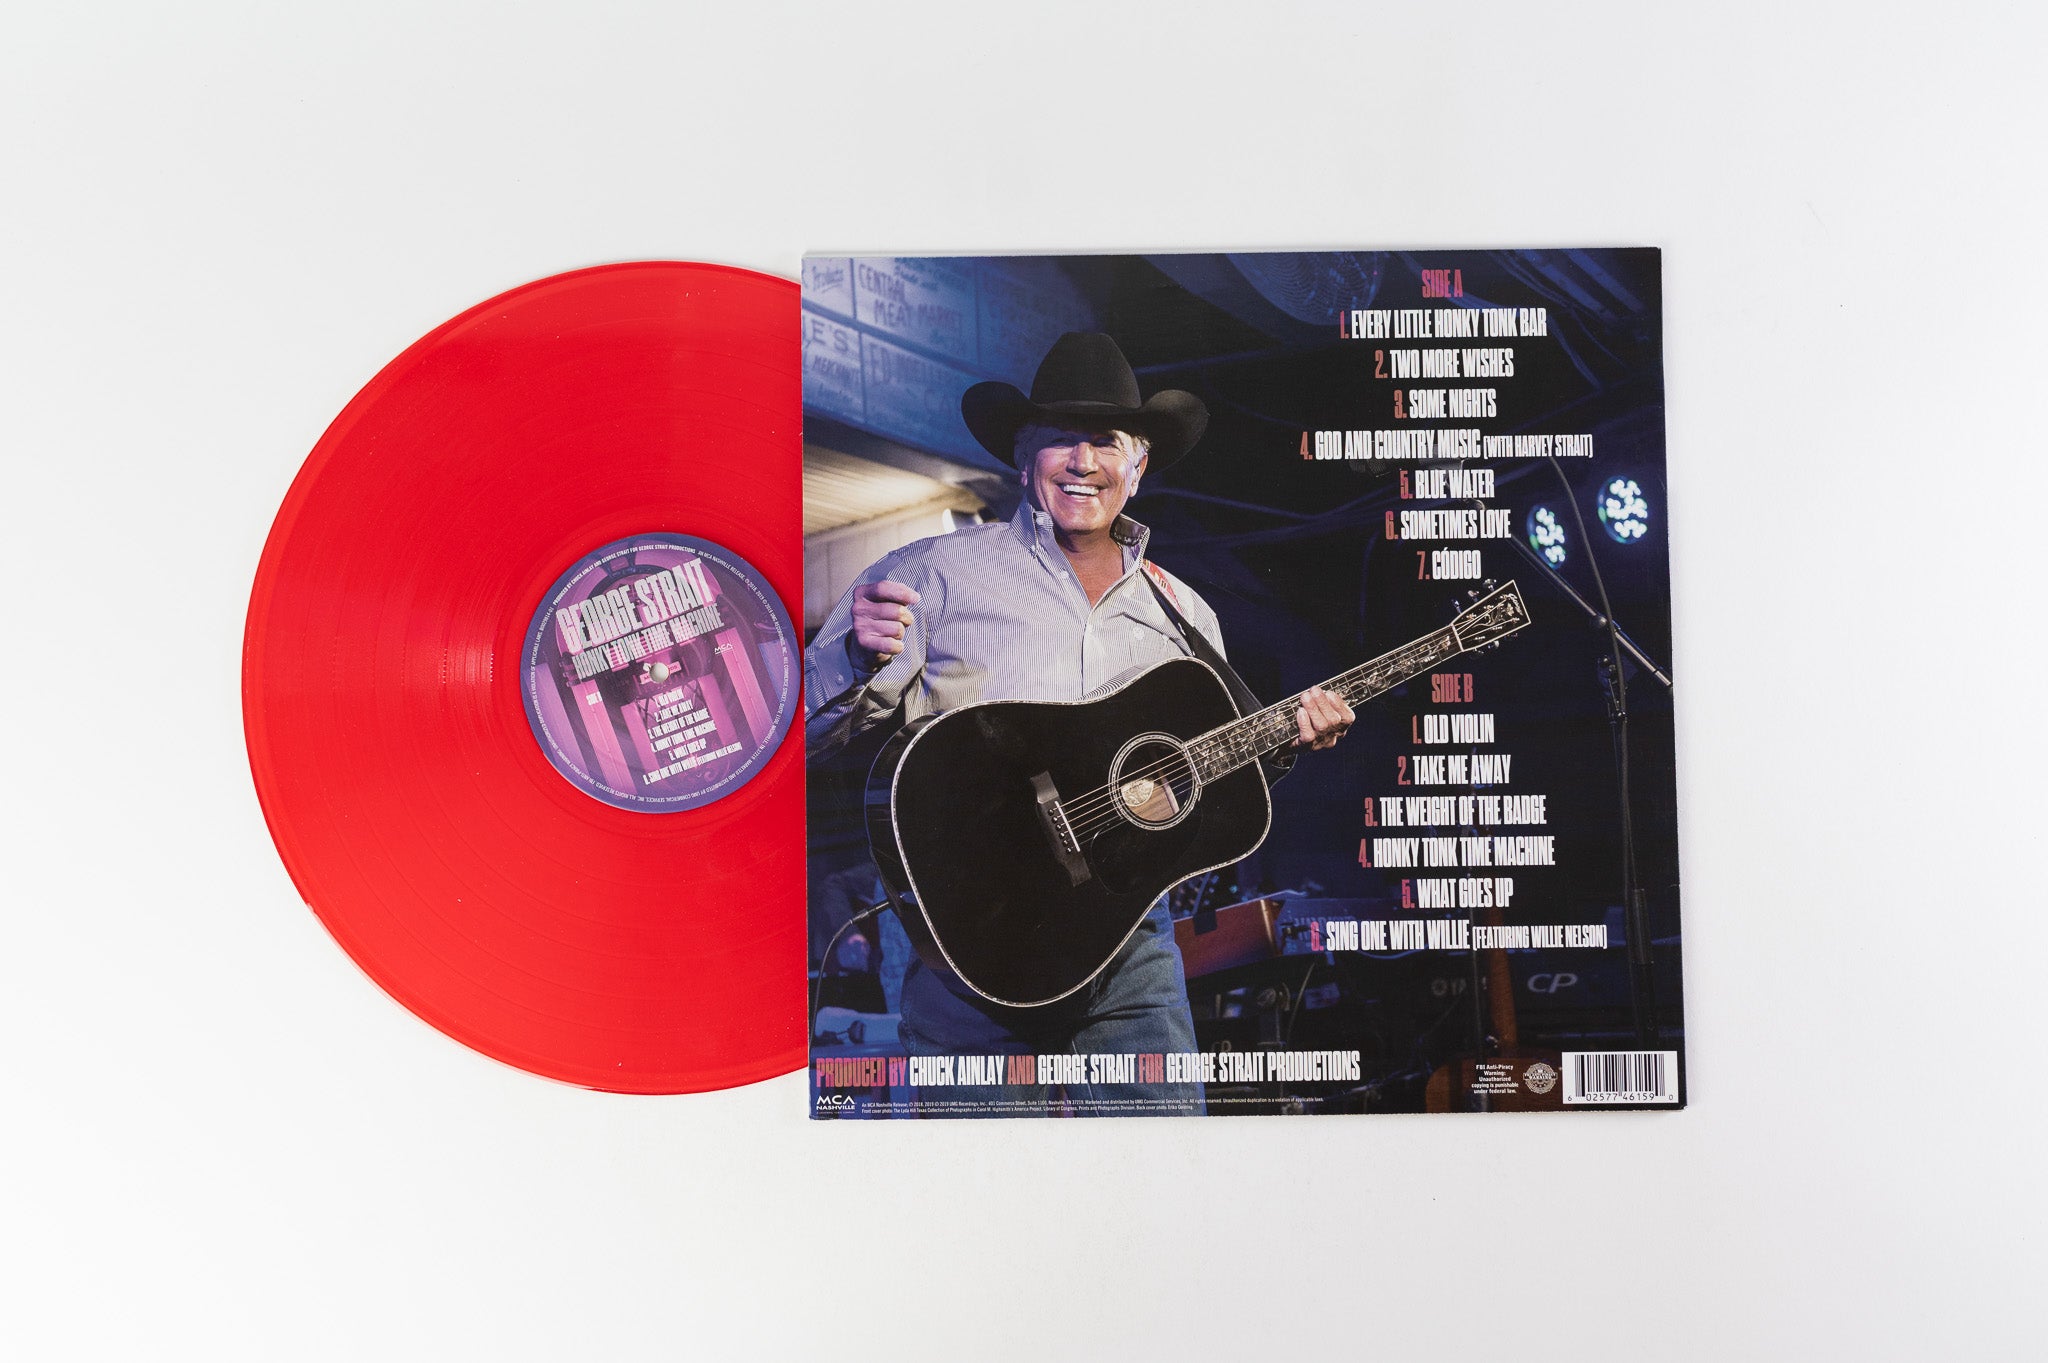 George Strait - Honky Tonk Time Machine on MCA Nashville Red Vinyl